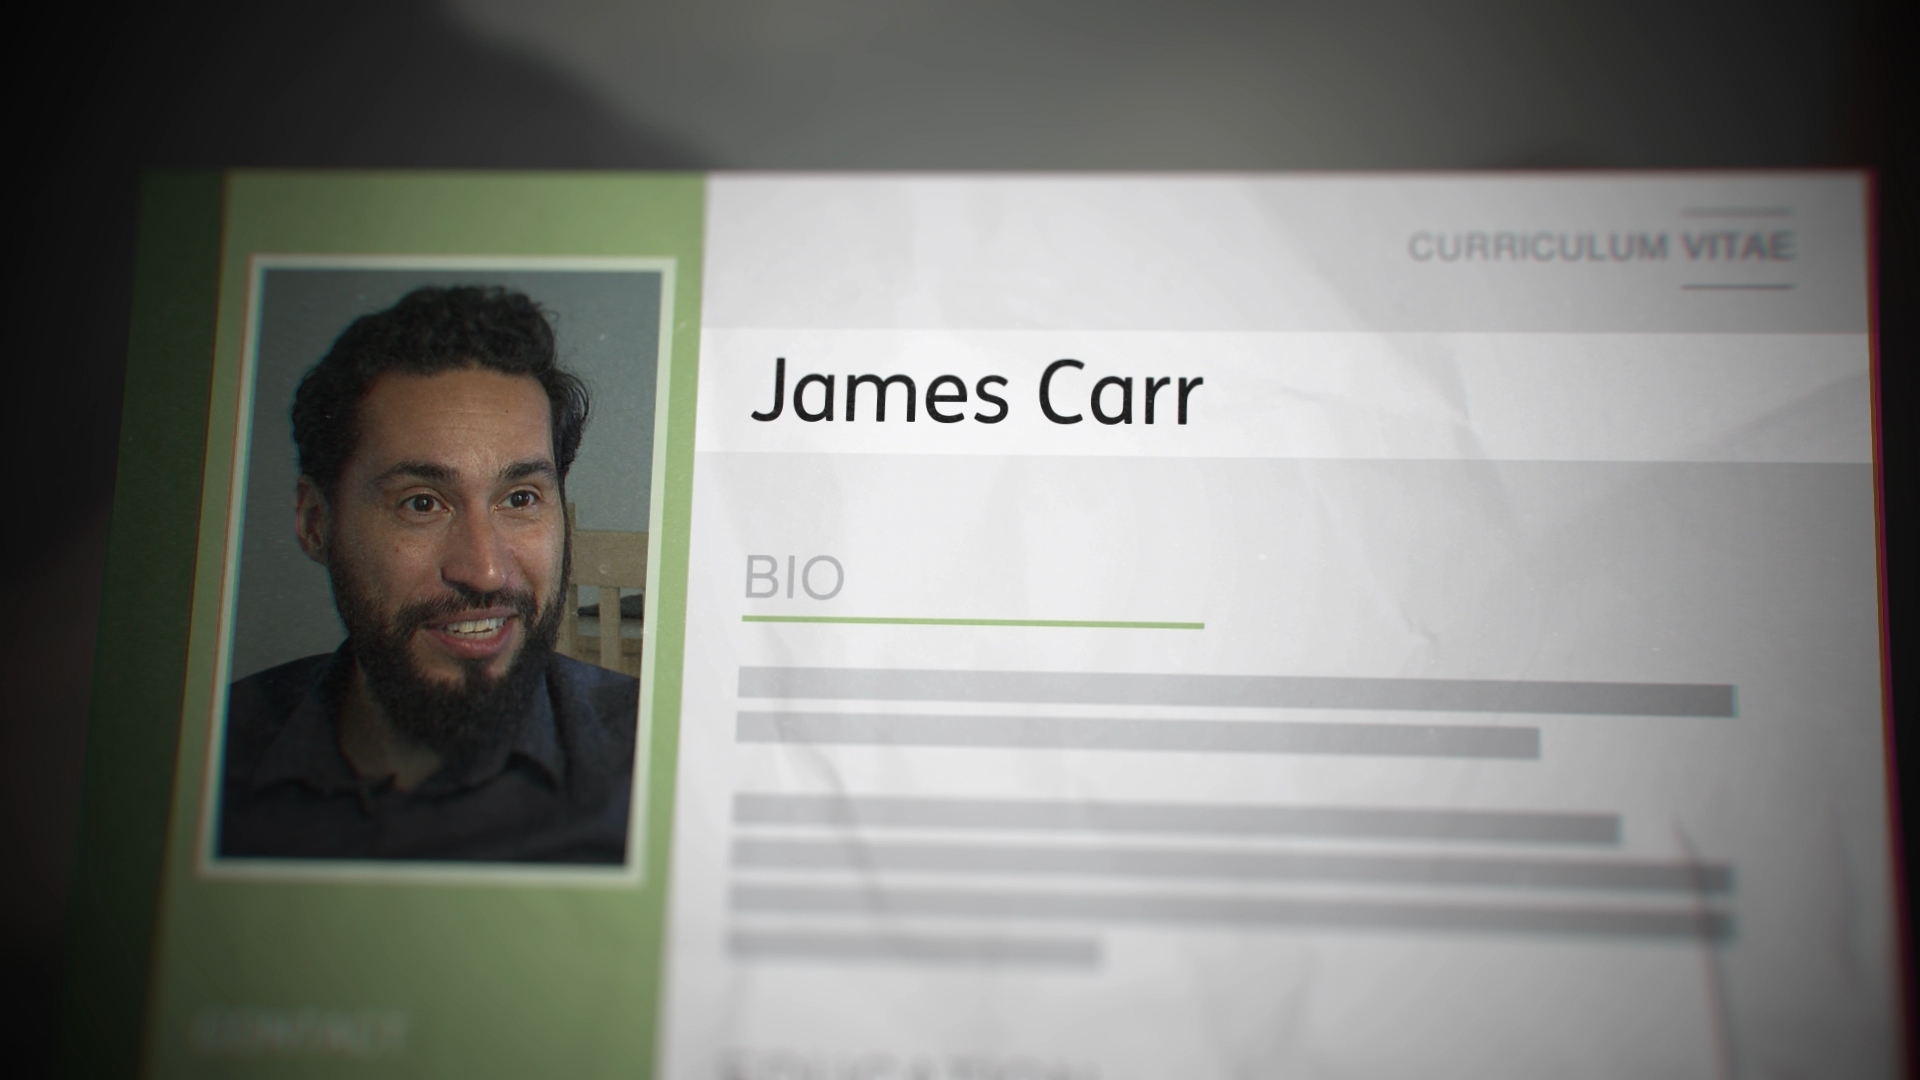 Thiago Carmo changed his name to James Carr on his CV.